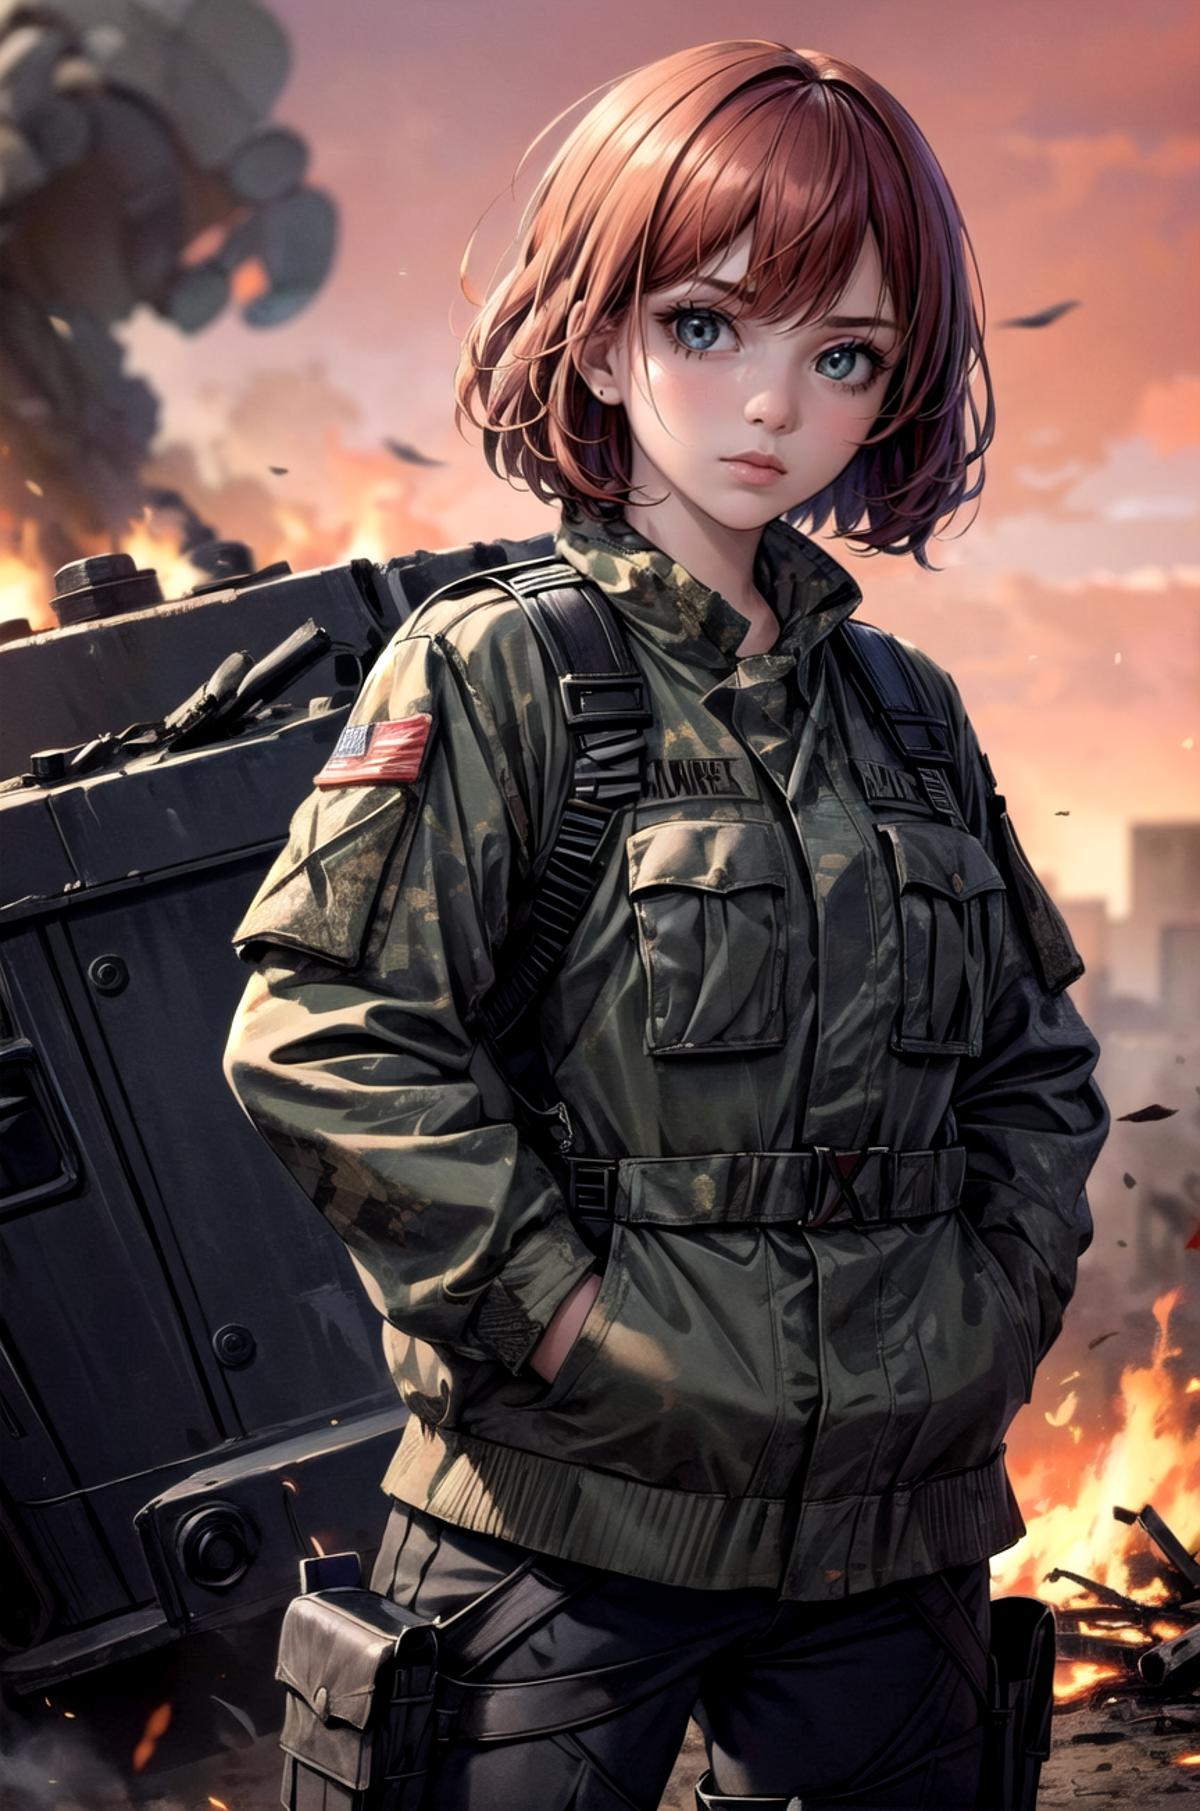 Camouflage Uniform image by Deto15